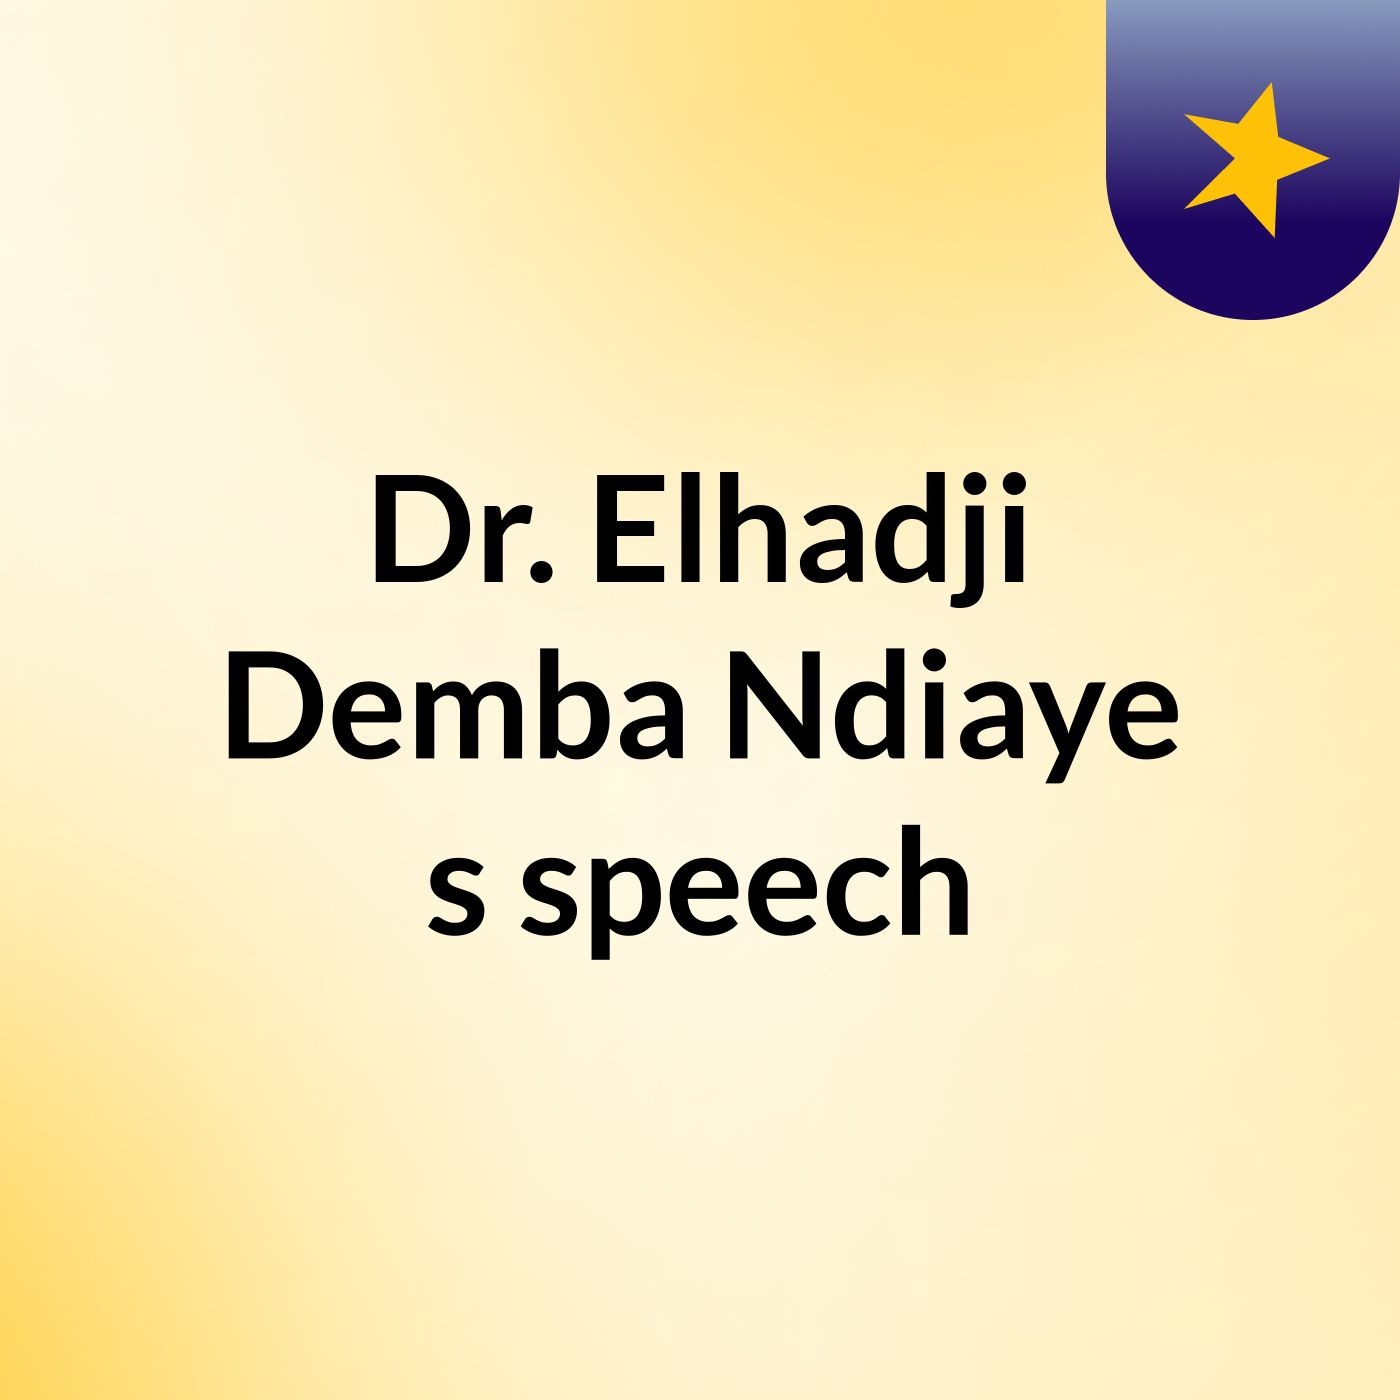 Dr. Elhadji Demba Ndiaye's speech